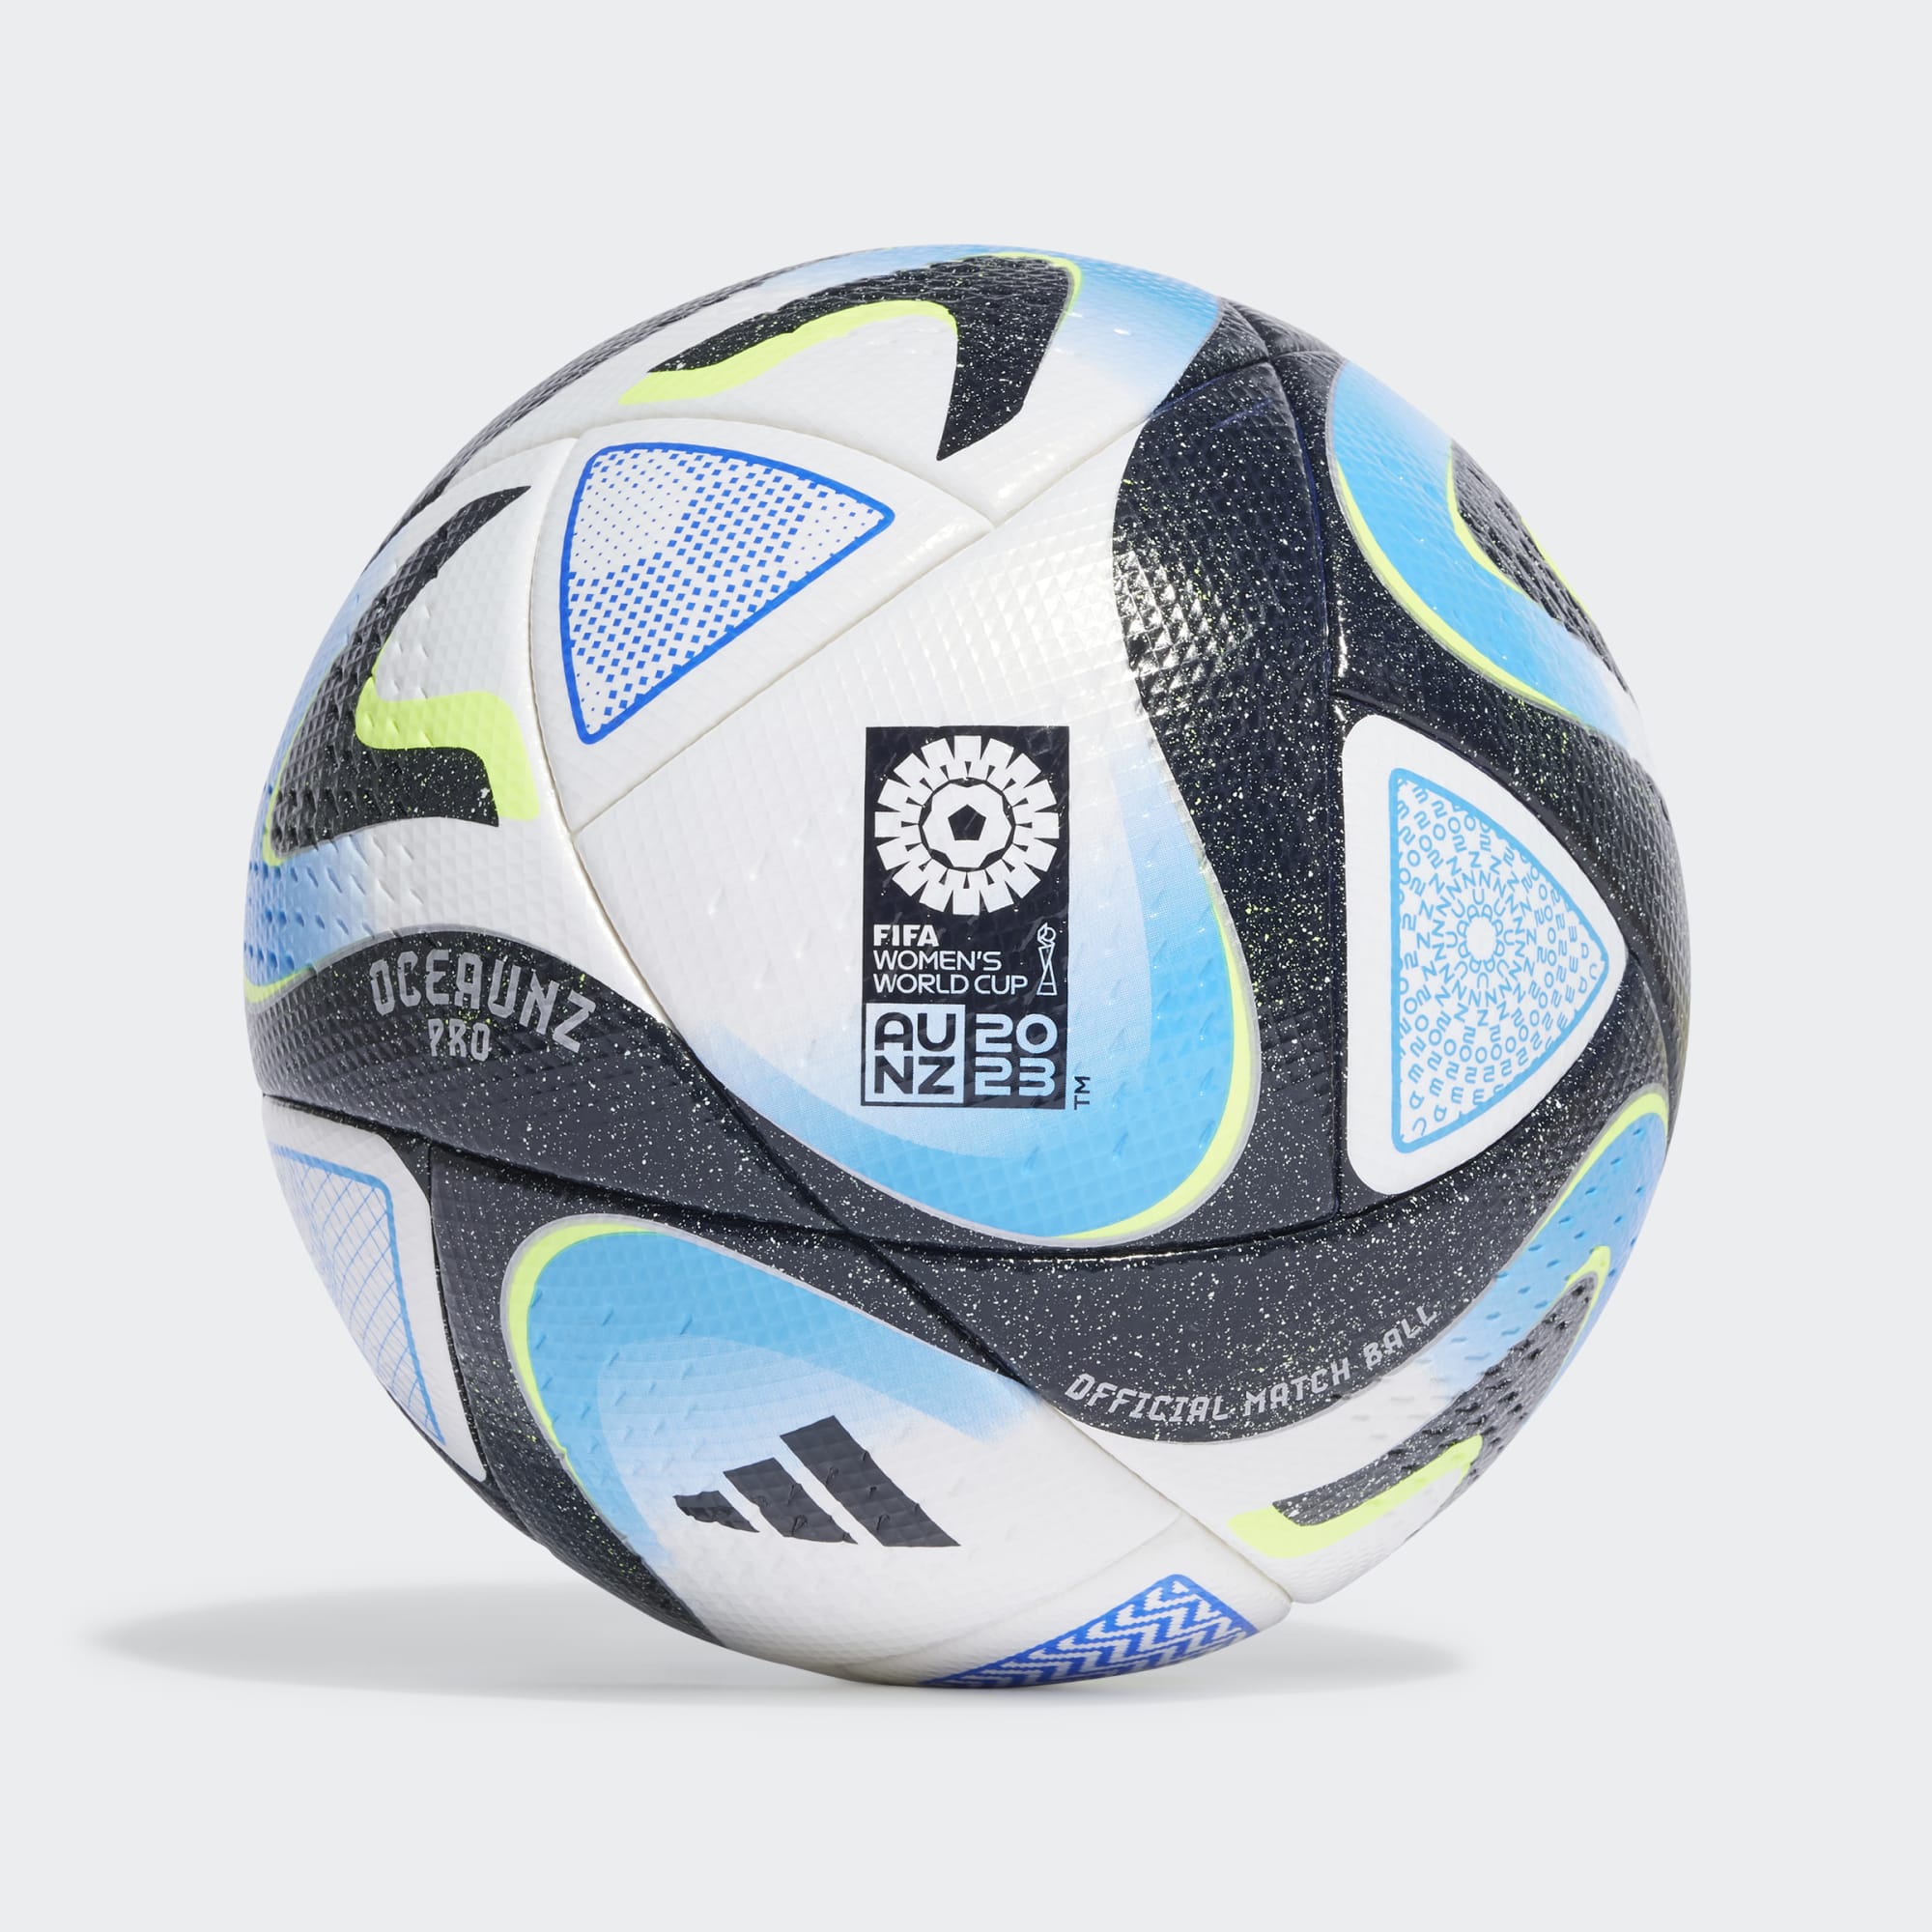 Autorización Sada campana stefanssoccer.com:adidas WWC23 Oceanunz Pro Official Match Ball - White /  Blue